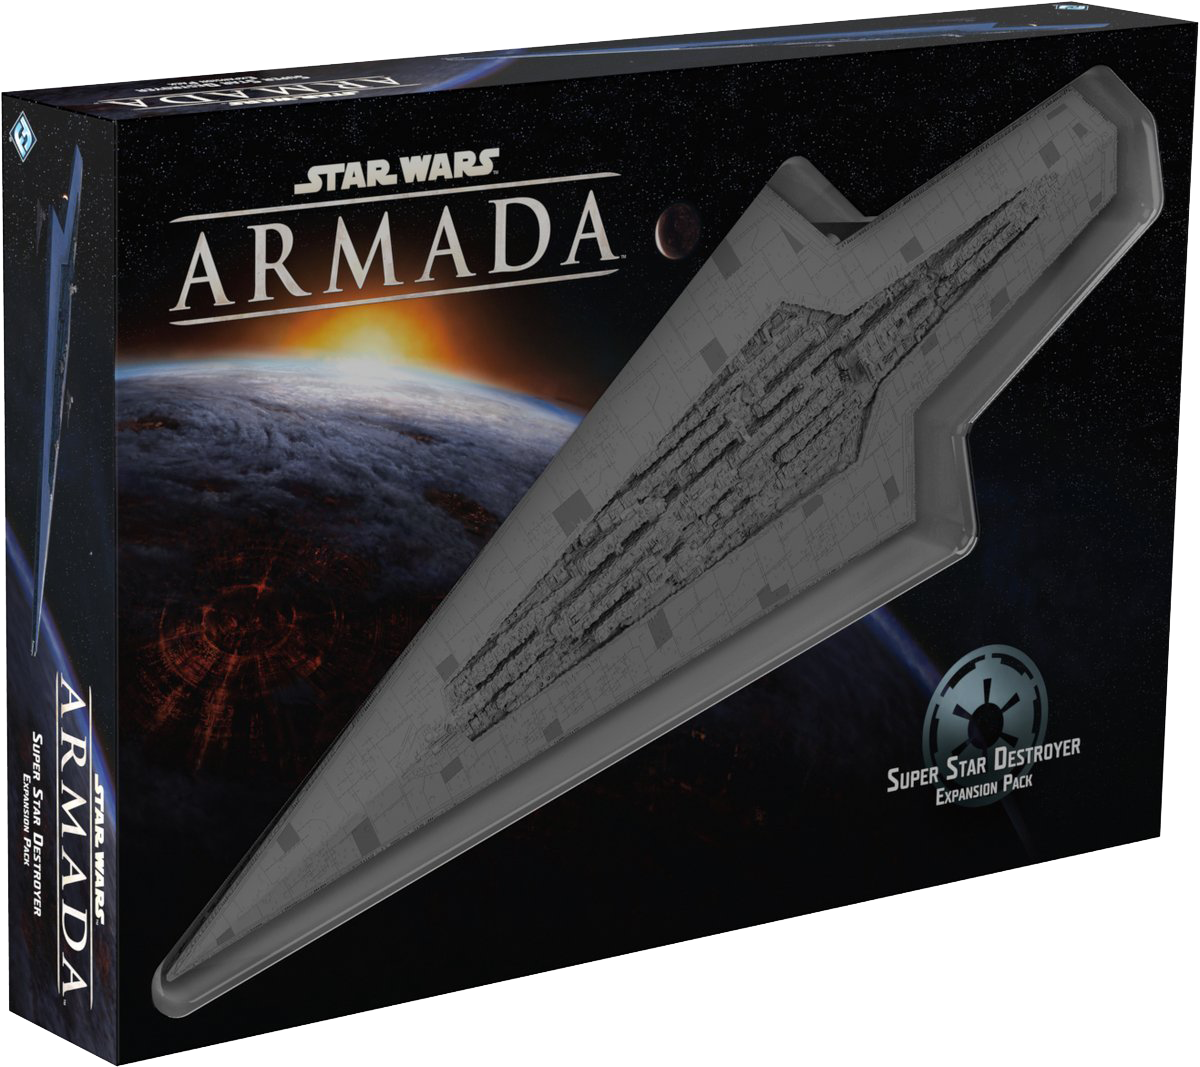 Star Wars Armada To Release Super Star Destroyer Tbs Comics